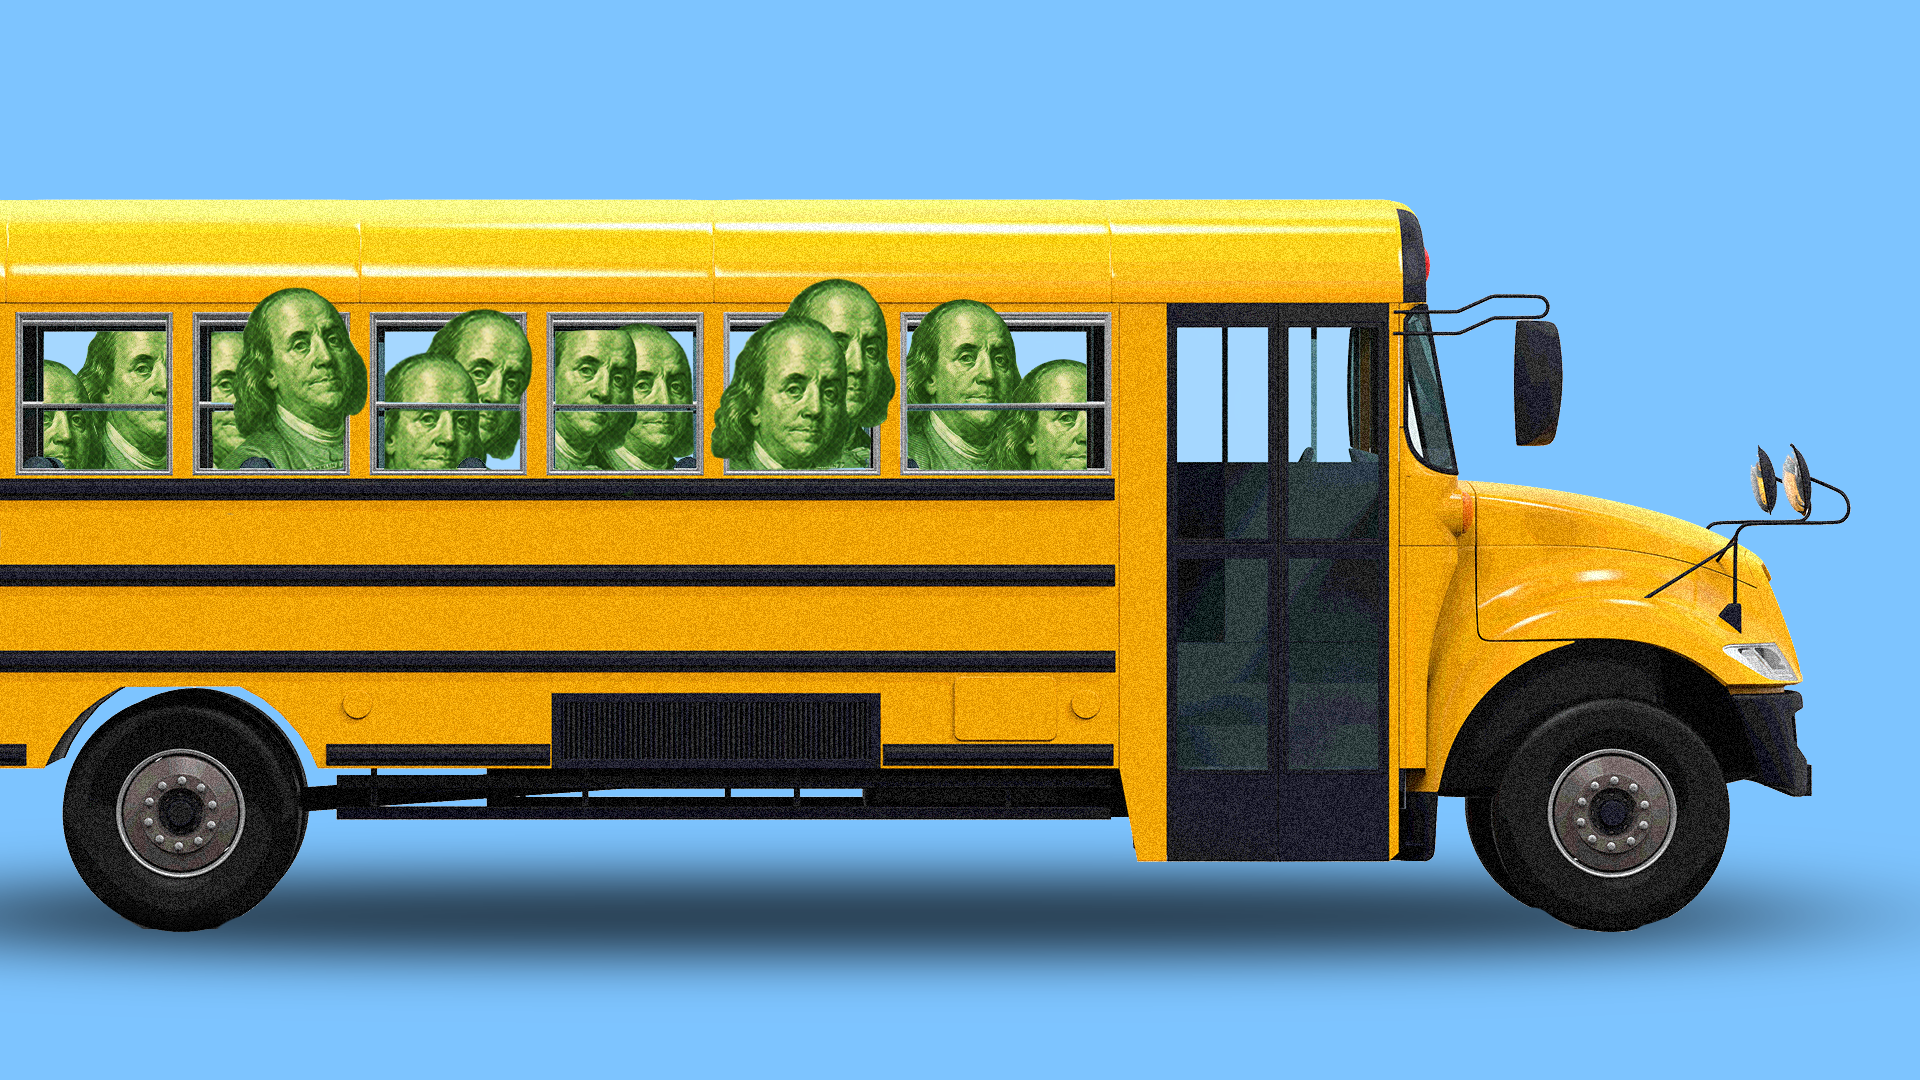 Schoolbus with hundred dollar bills